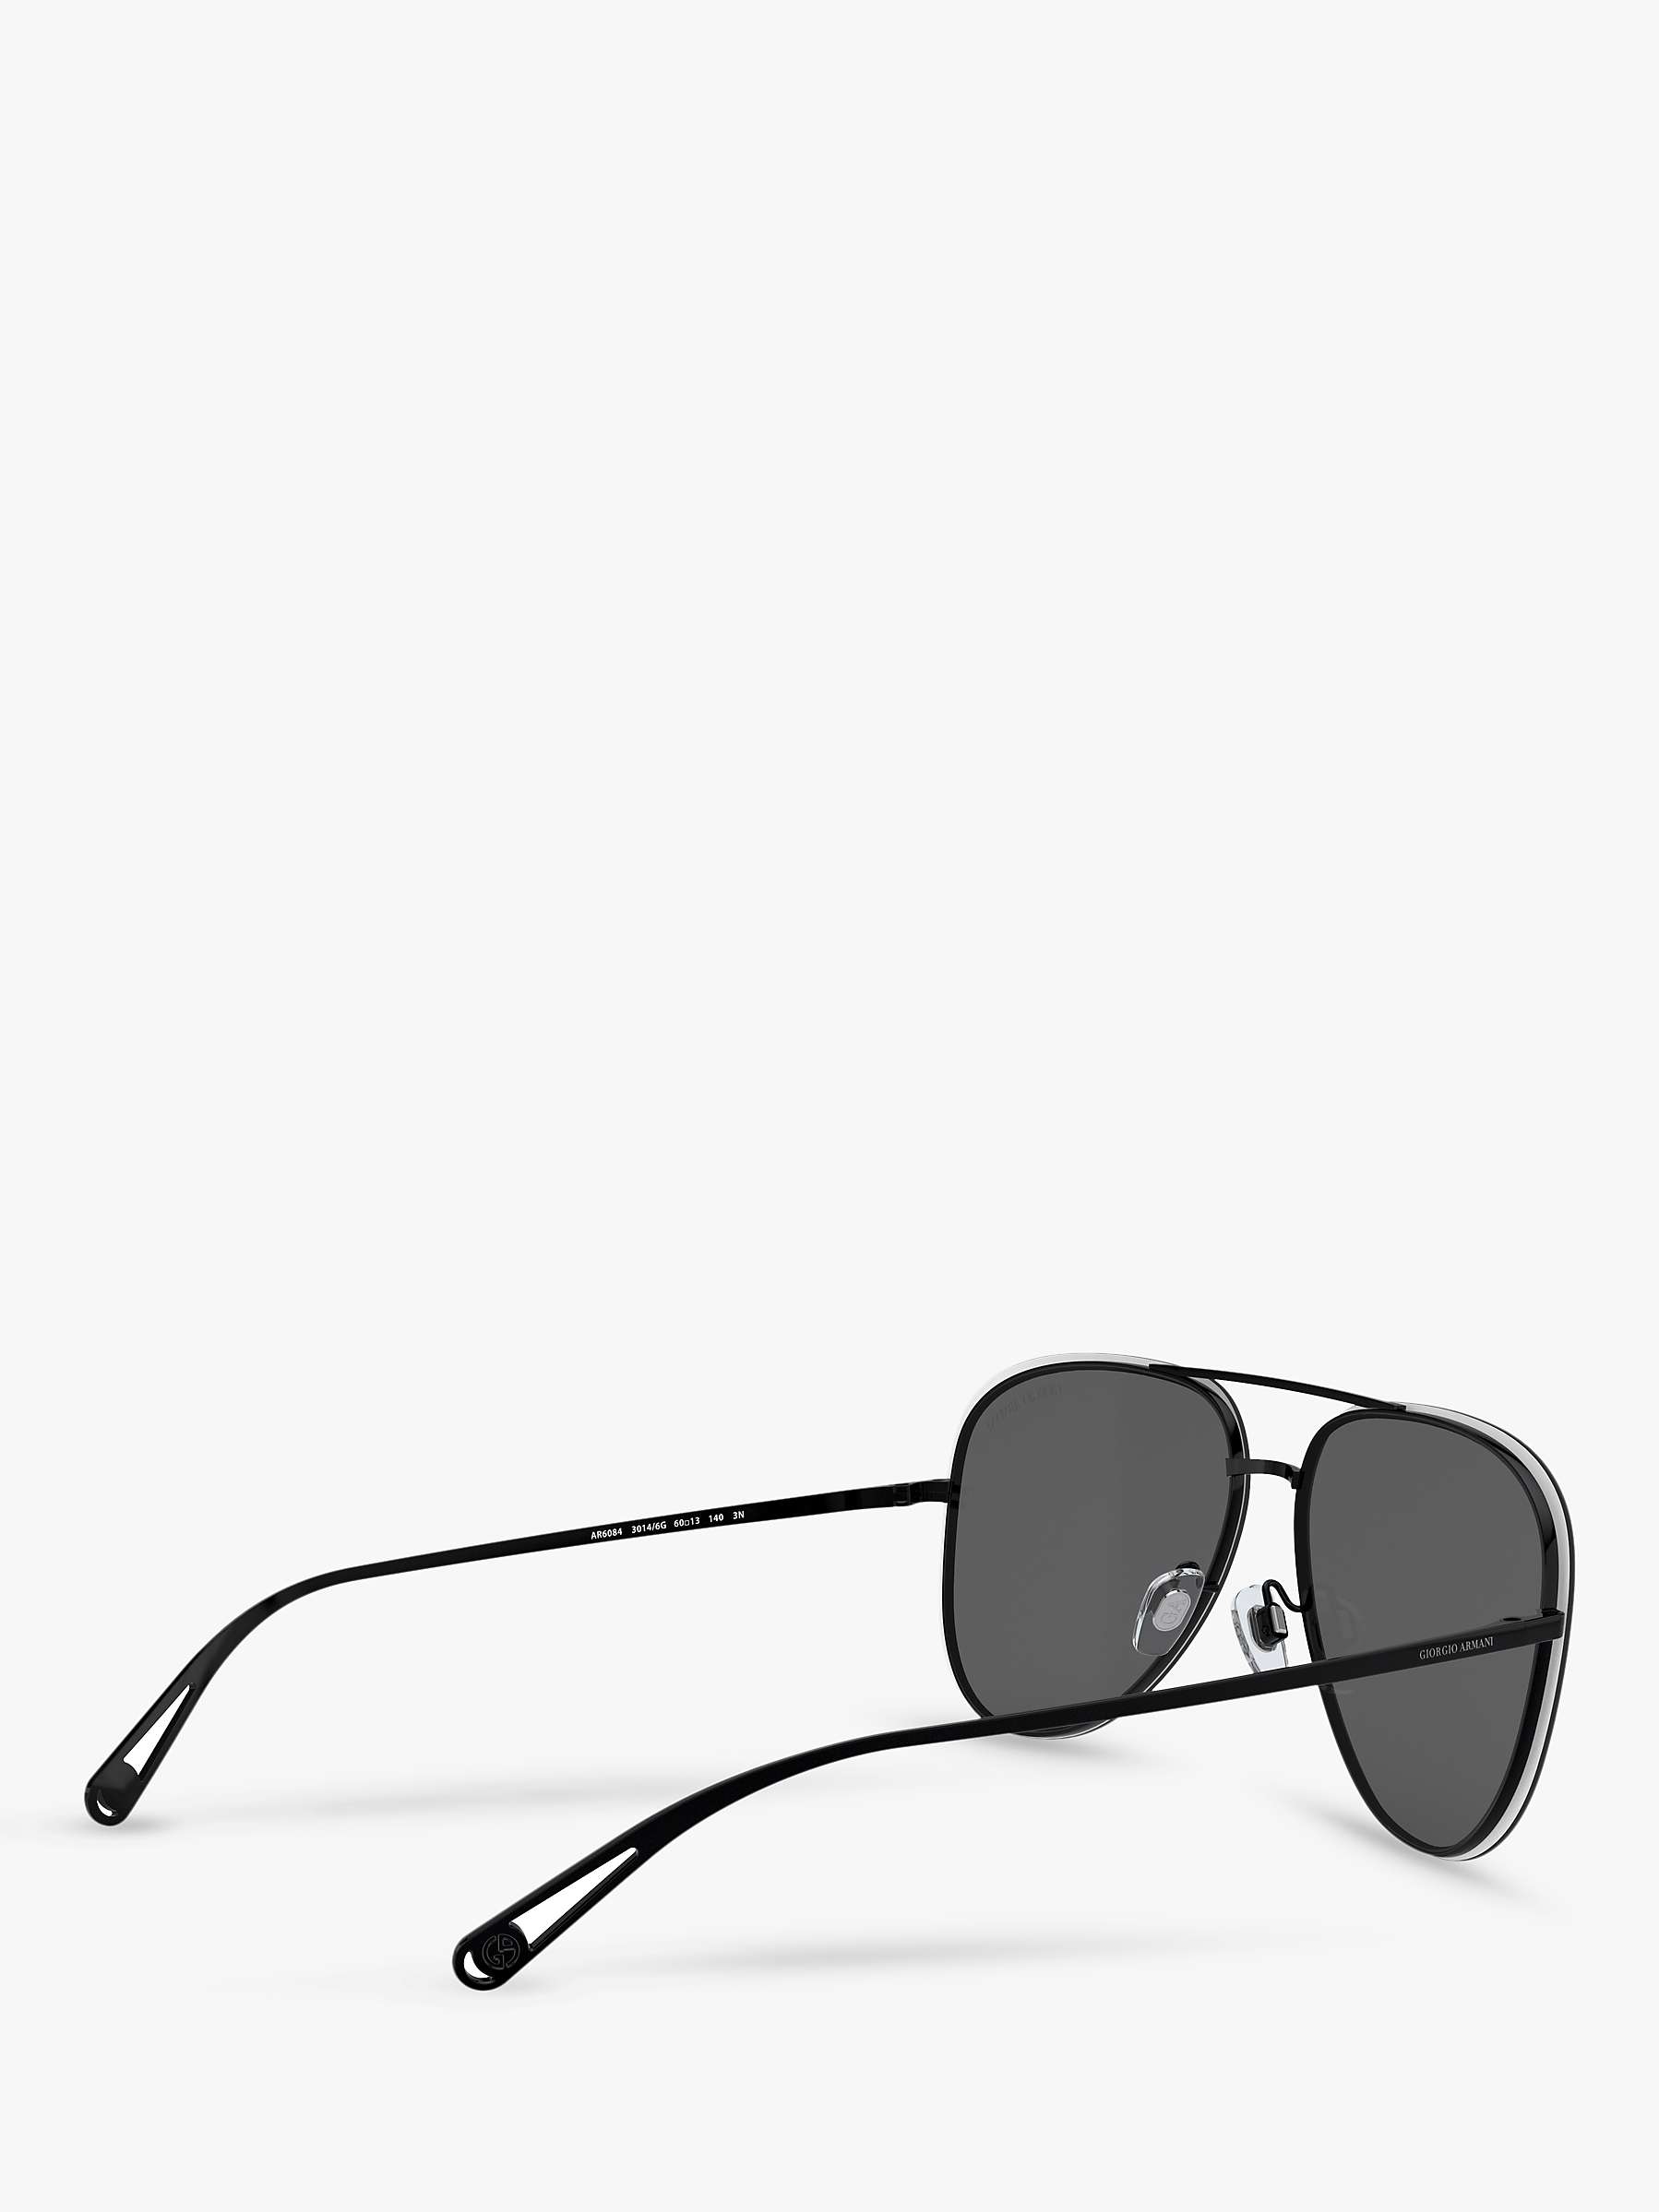 Buy Giorgio Armani AR6084 Women's Aviator Sunglasses, Black/Mirror Grey Online at johnlewis.com